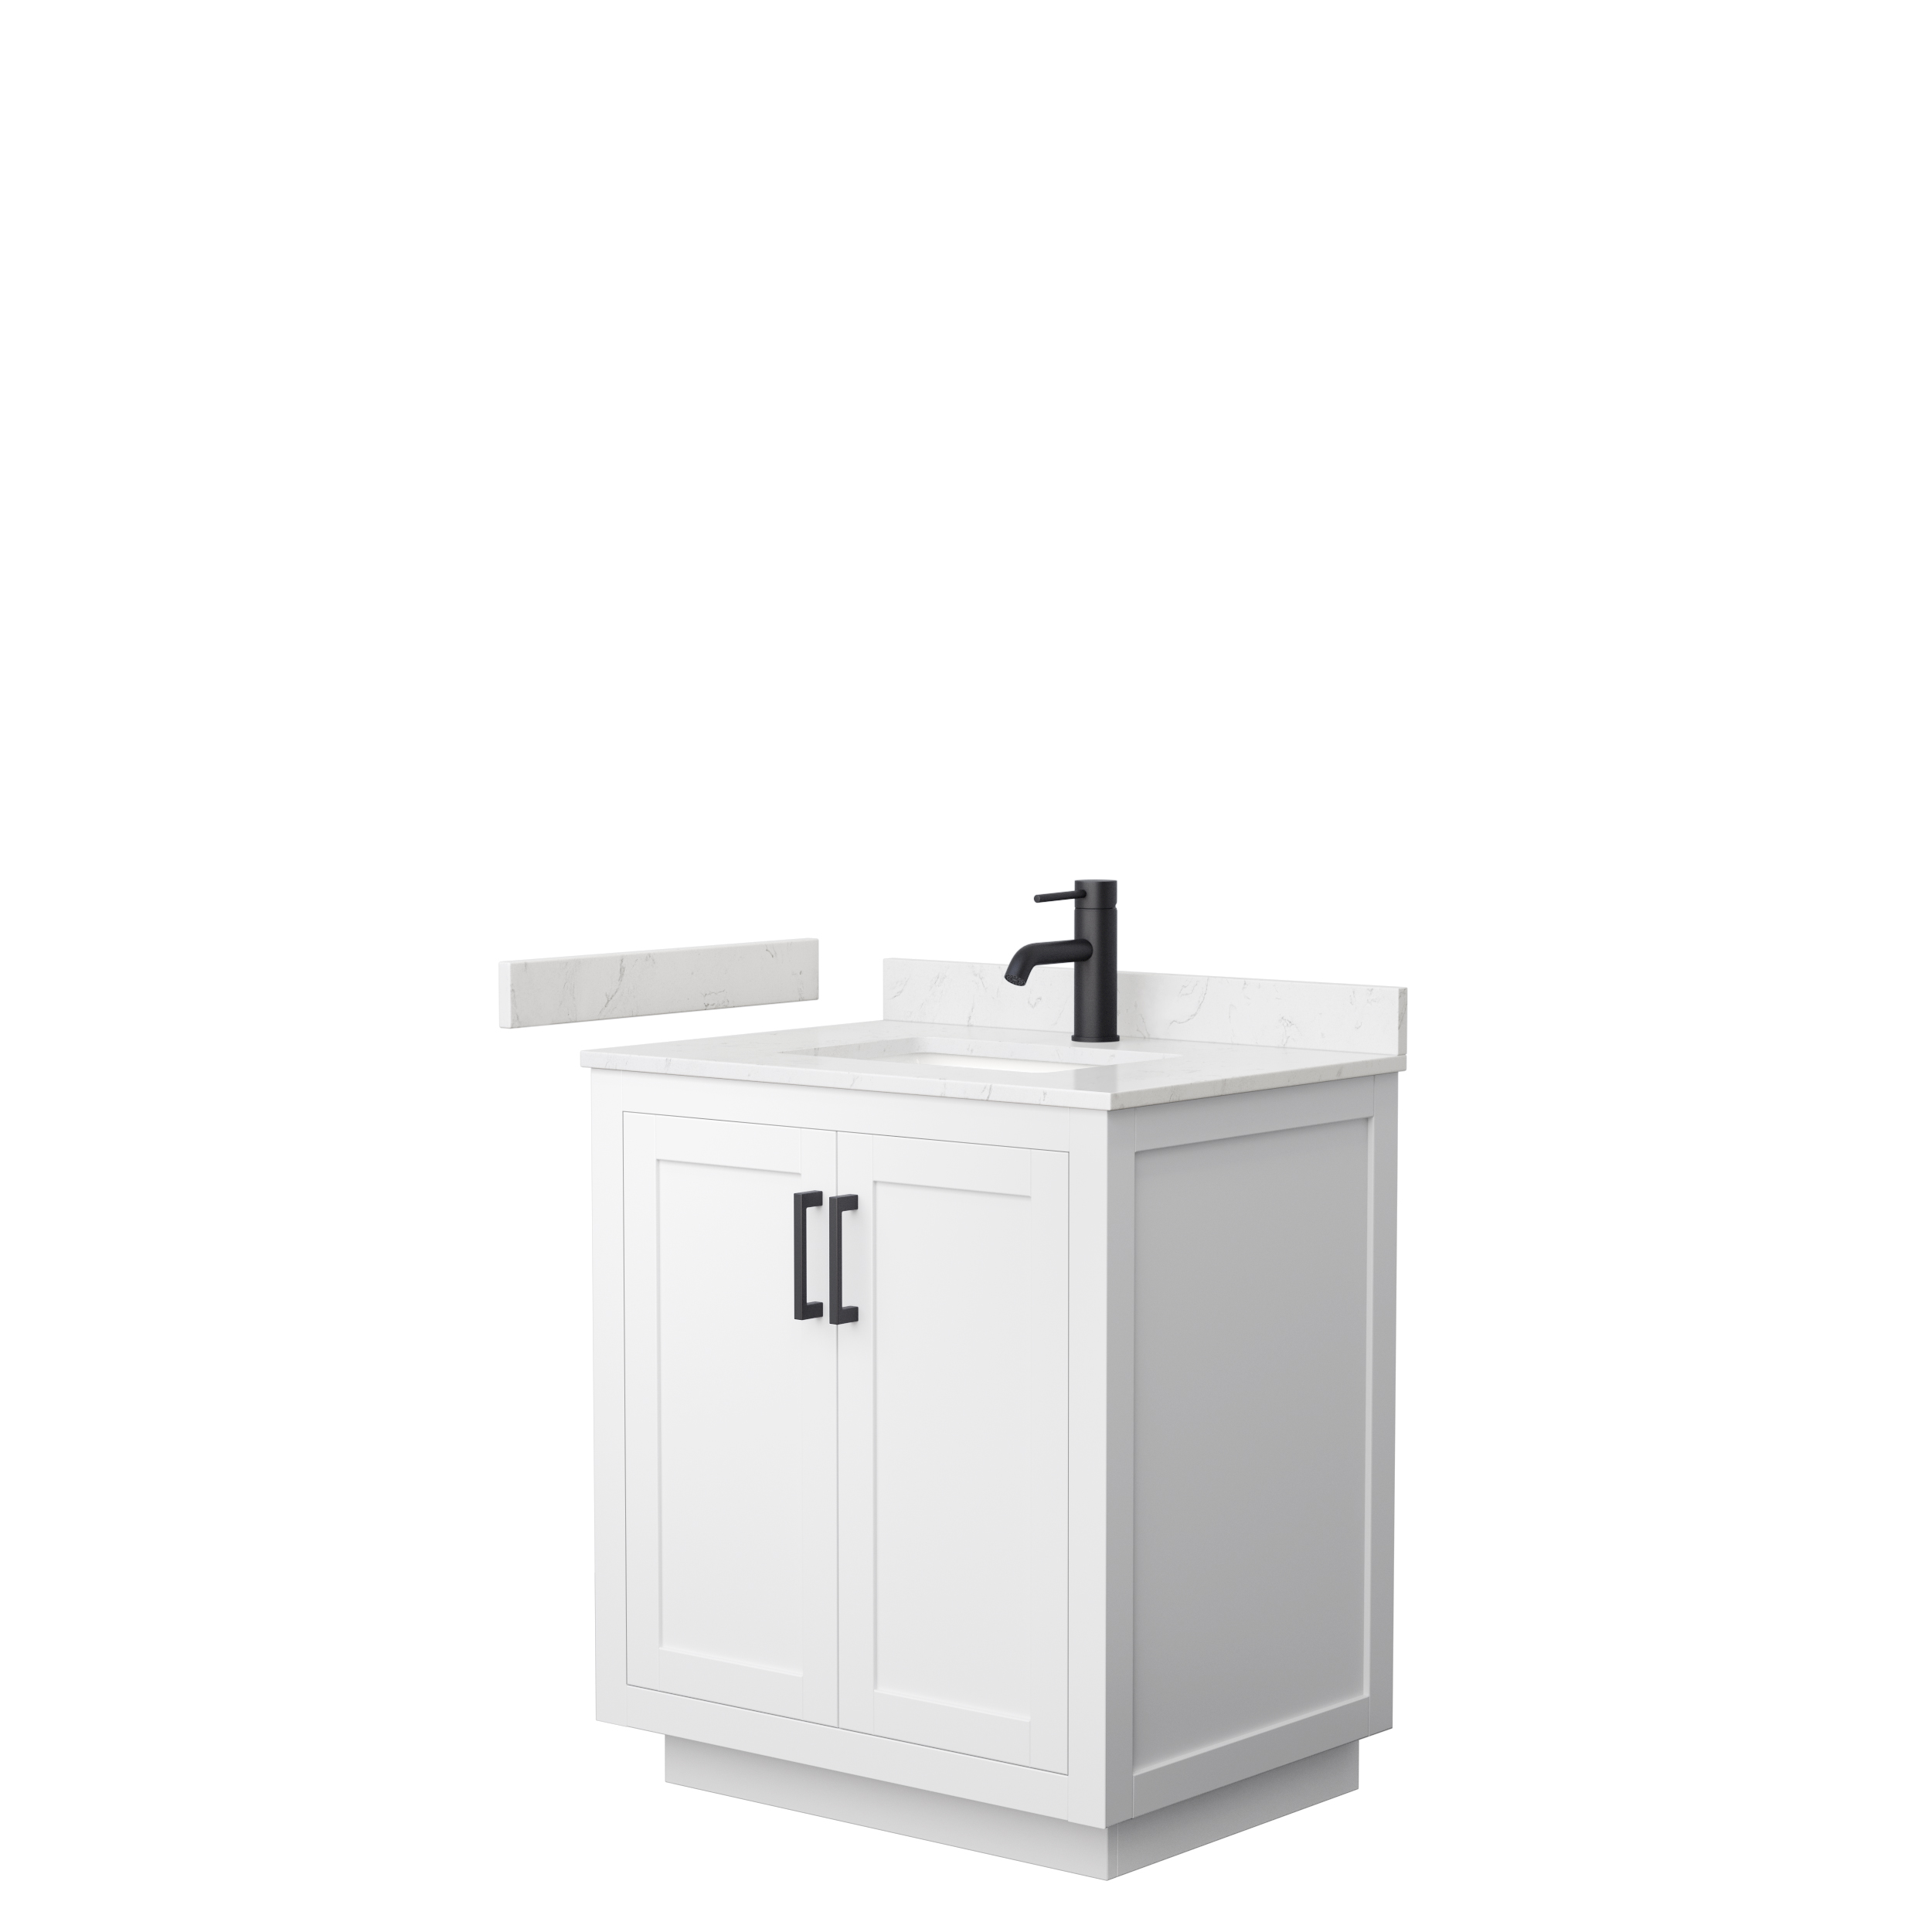 30" Single Bathroom Vanity in White, Light-Vein Carrara Cultured Marble Countertop, Undermount Square Sink, Matte Black Trim